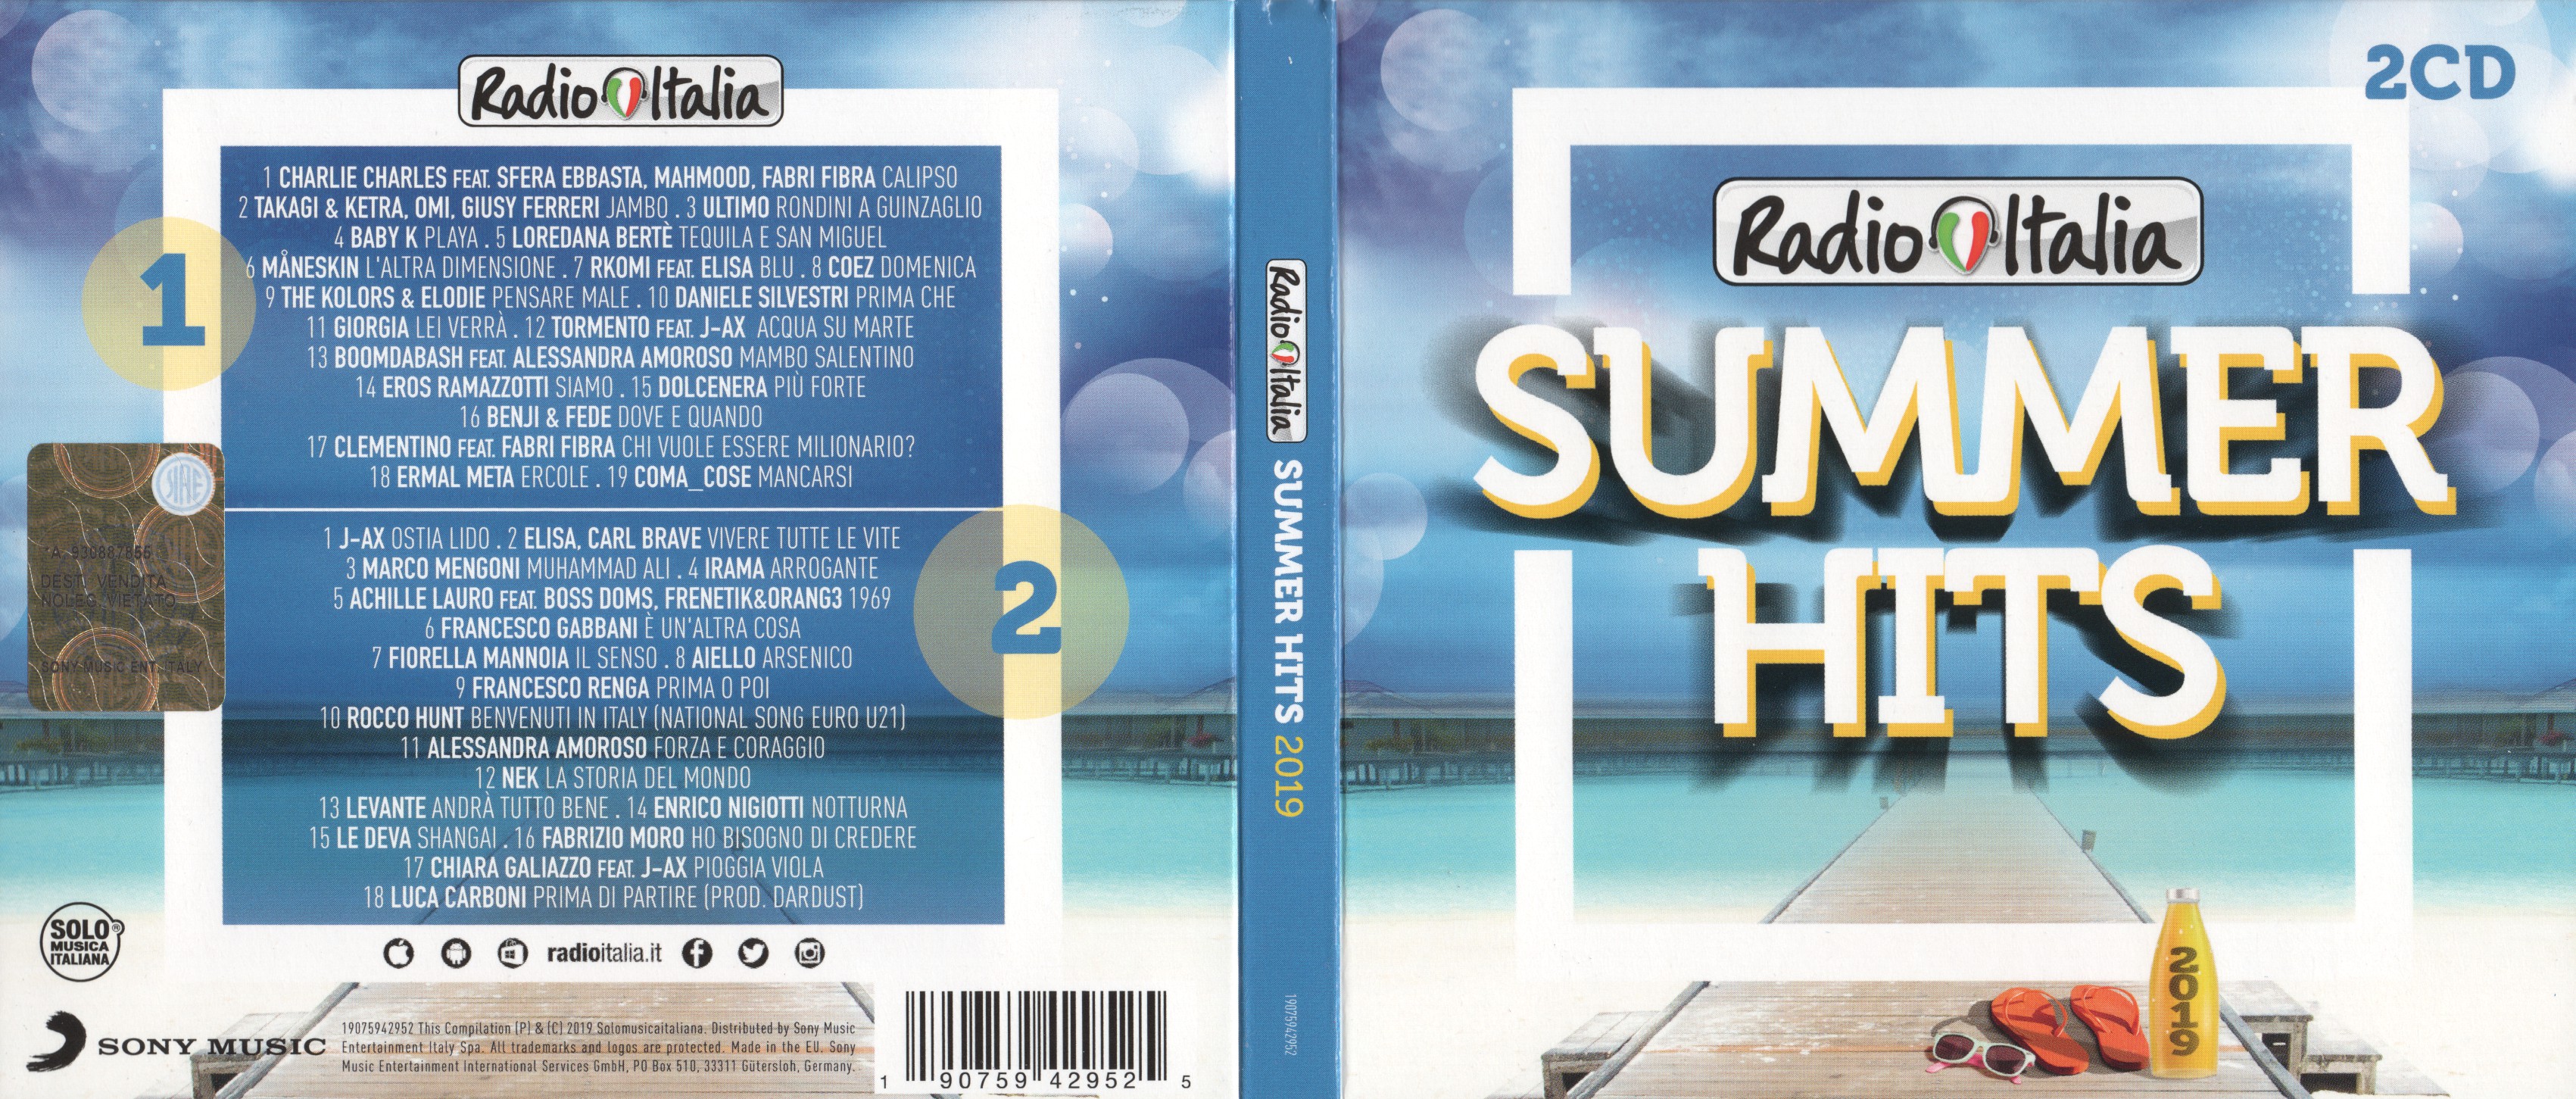 Covers Box Sk Radio Italia Summer Hits 19 19 High Quality Dvd Blueray Movie